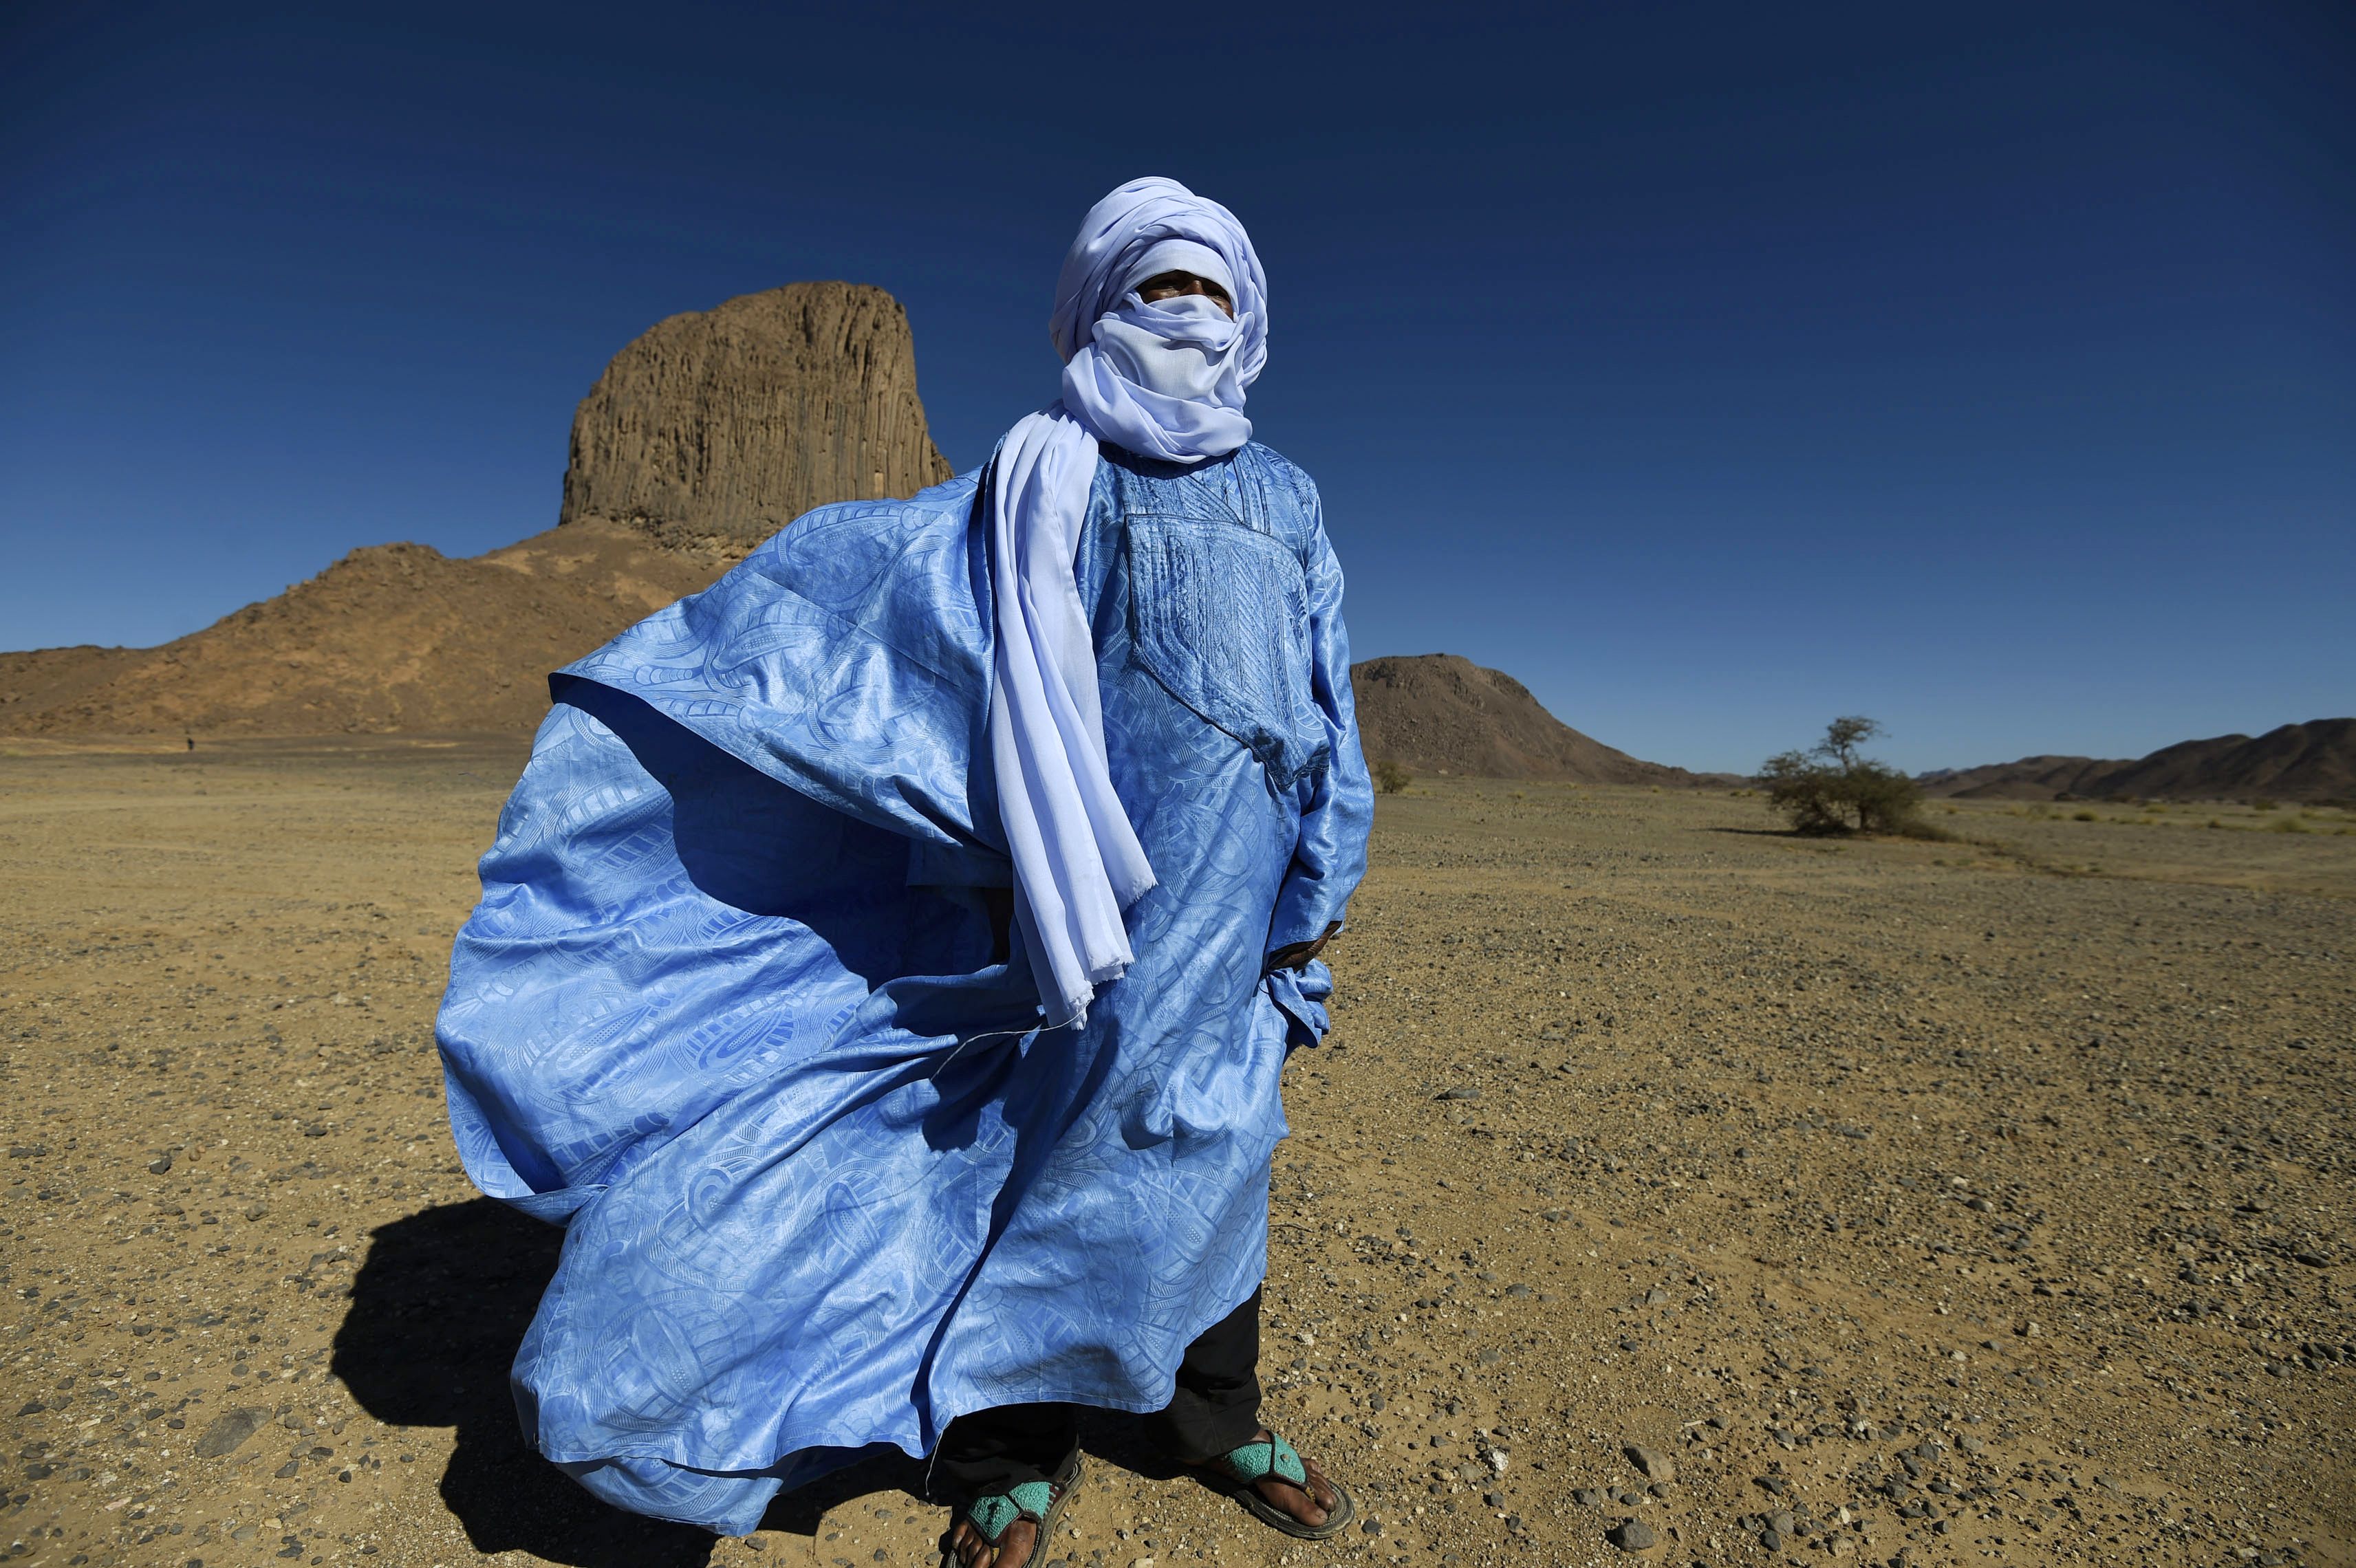 II. History and Origins of Desert Nomads